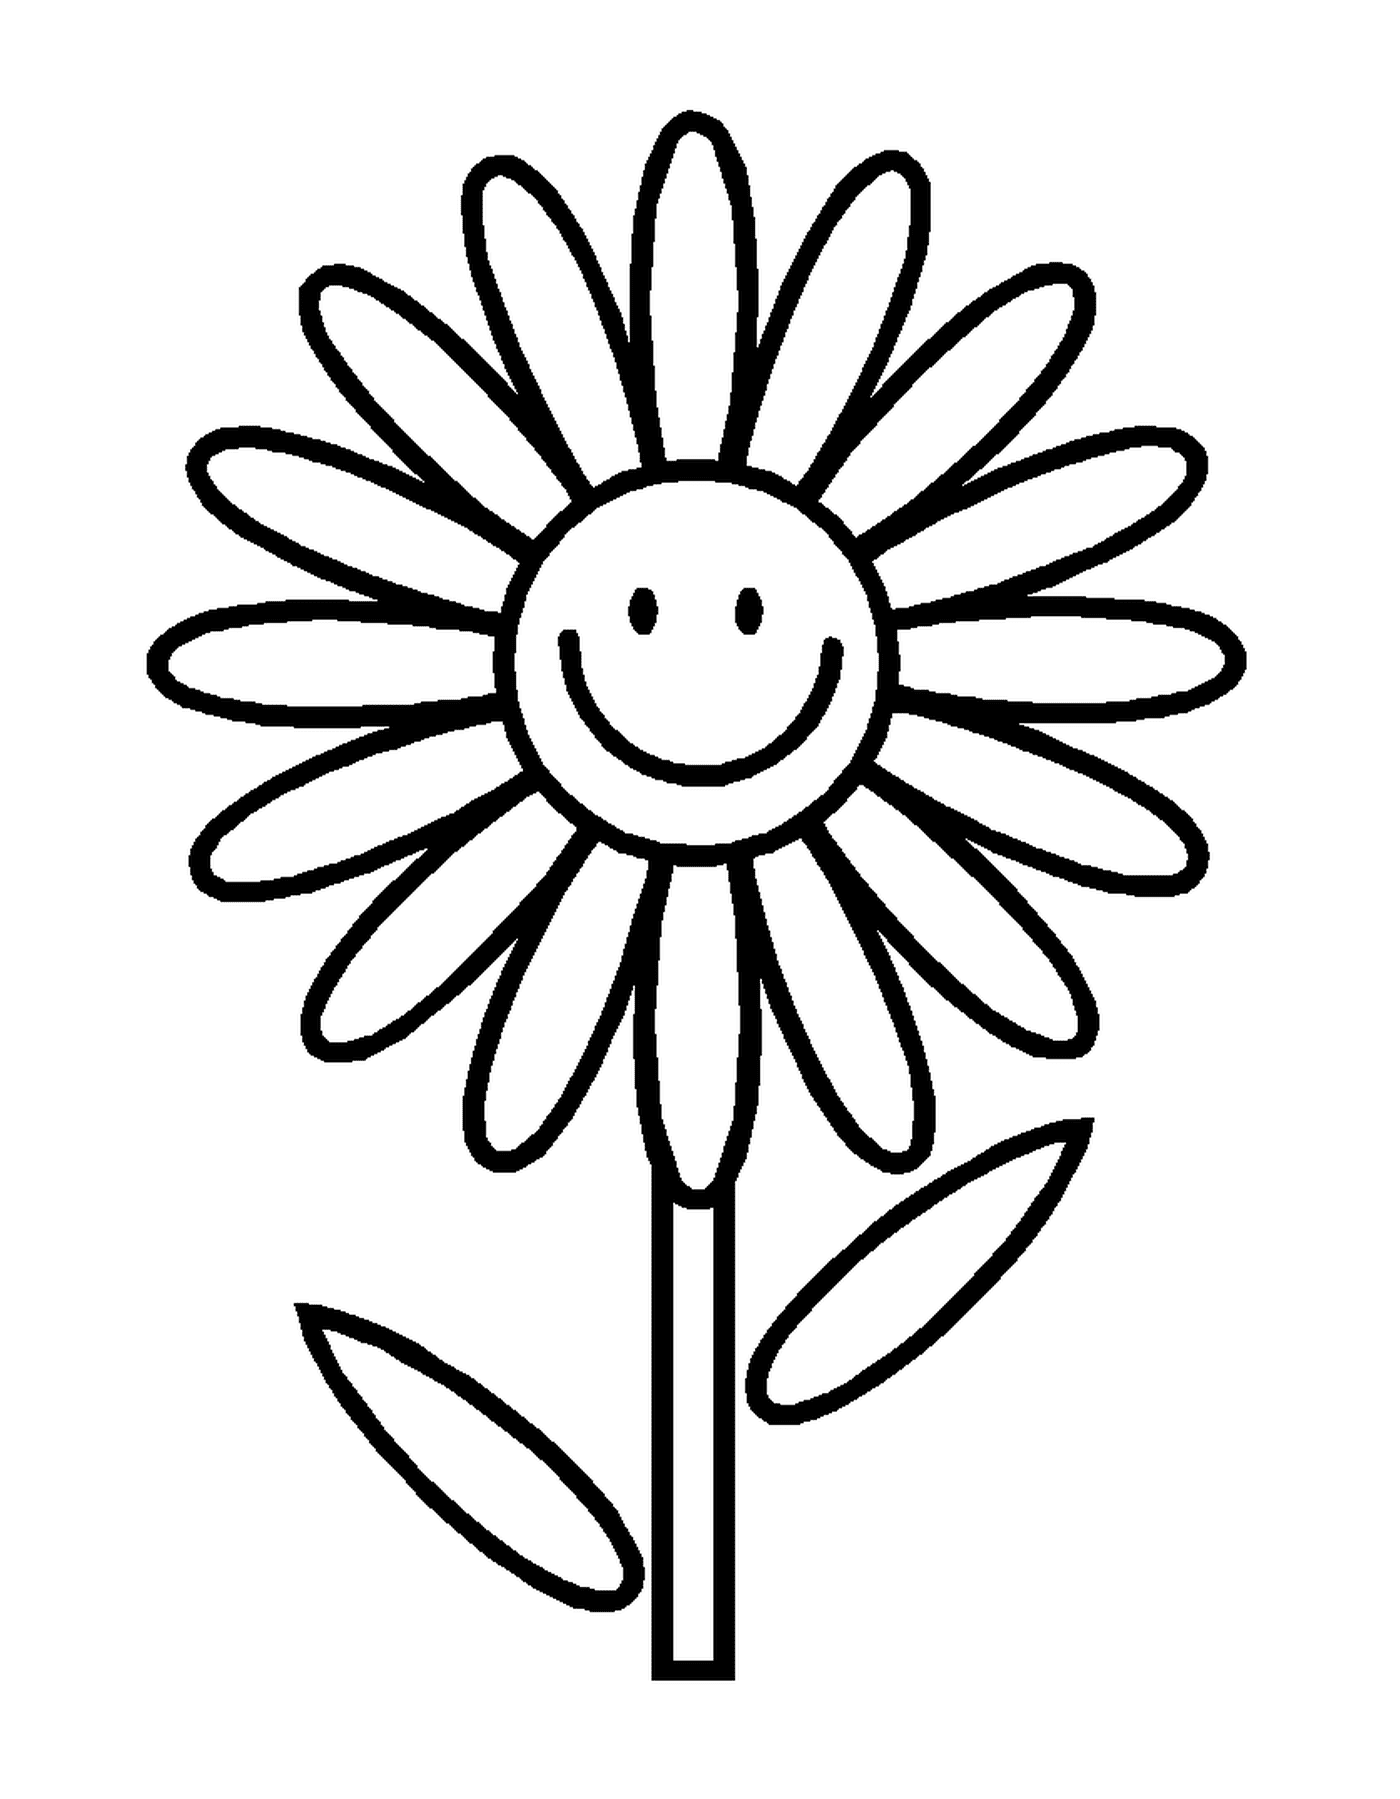  Un fiore sorridente 